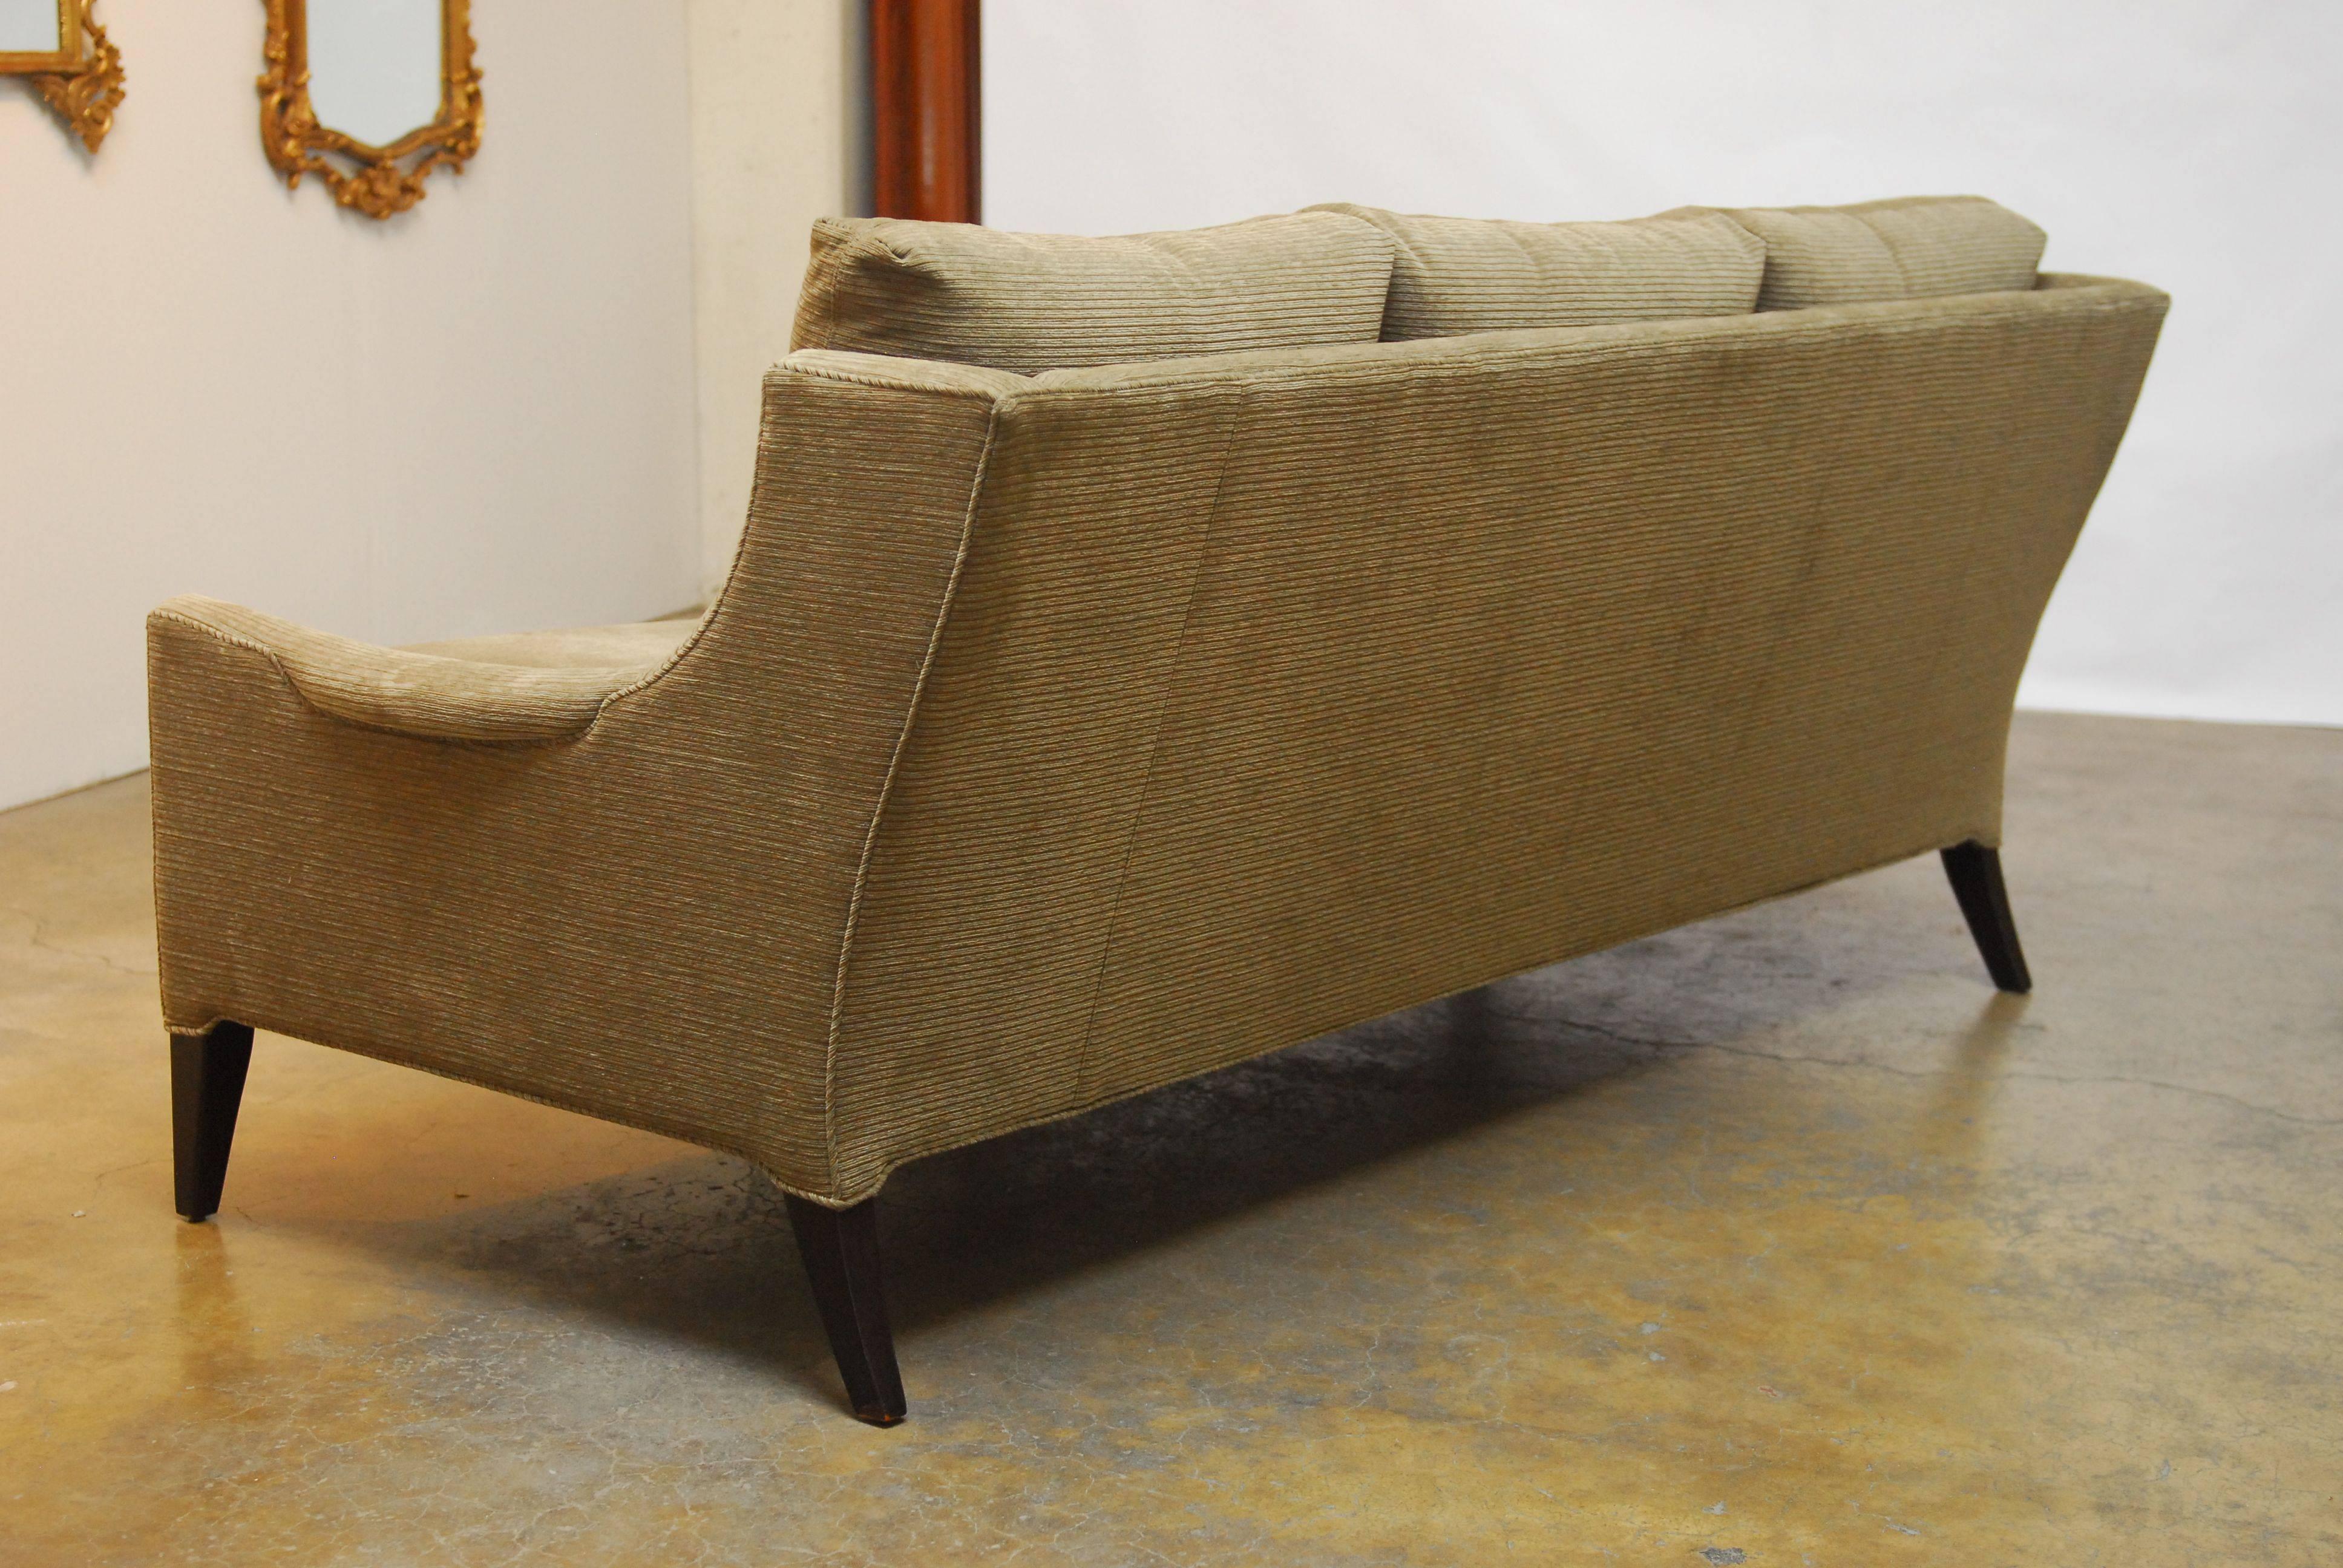 20th Century Mid-Century Modern Style Sofa by Kravet